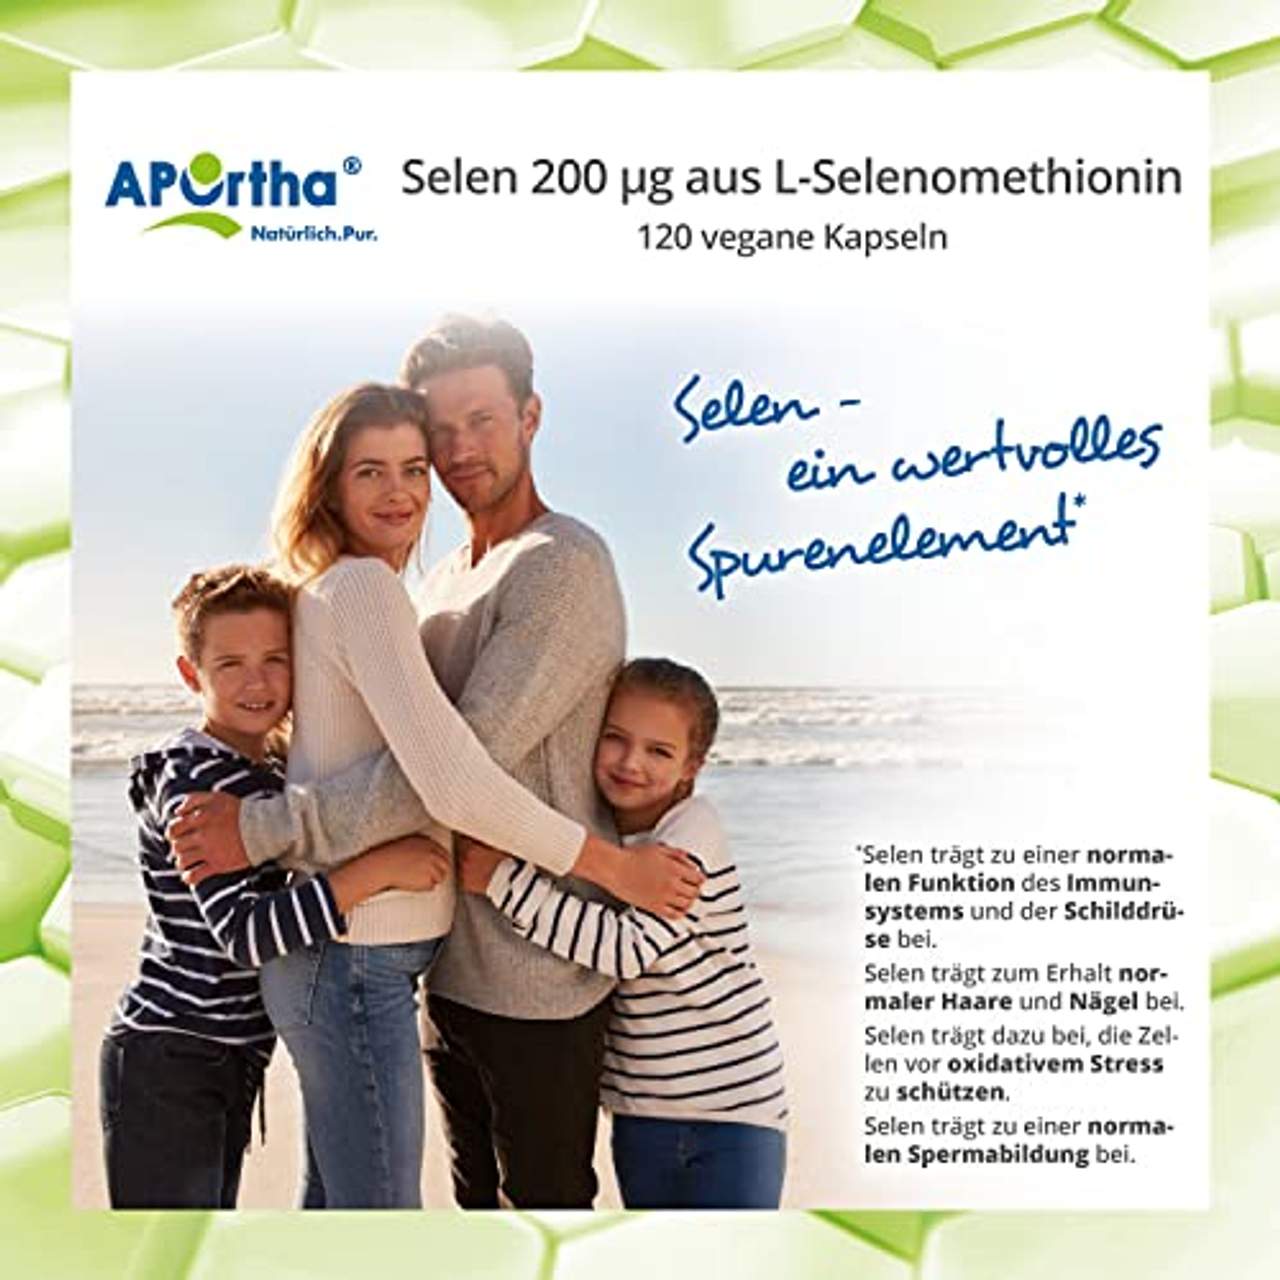 APOrtha Selen Kapseln 120 Stück I Selen 200 µg aus L-Selenomethionin I in Deutschland